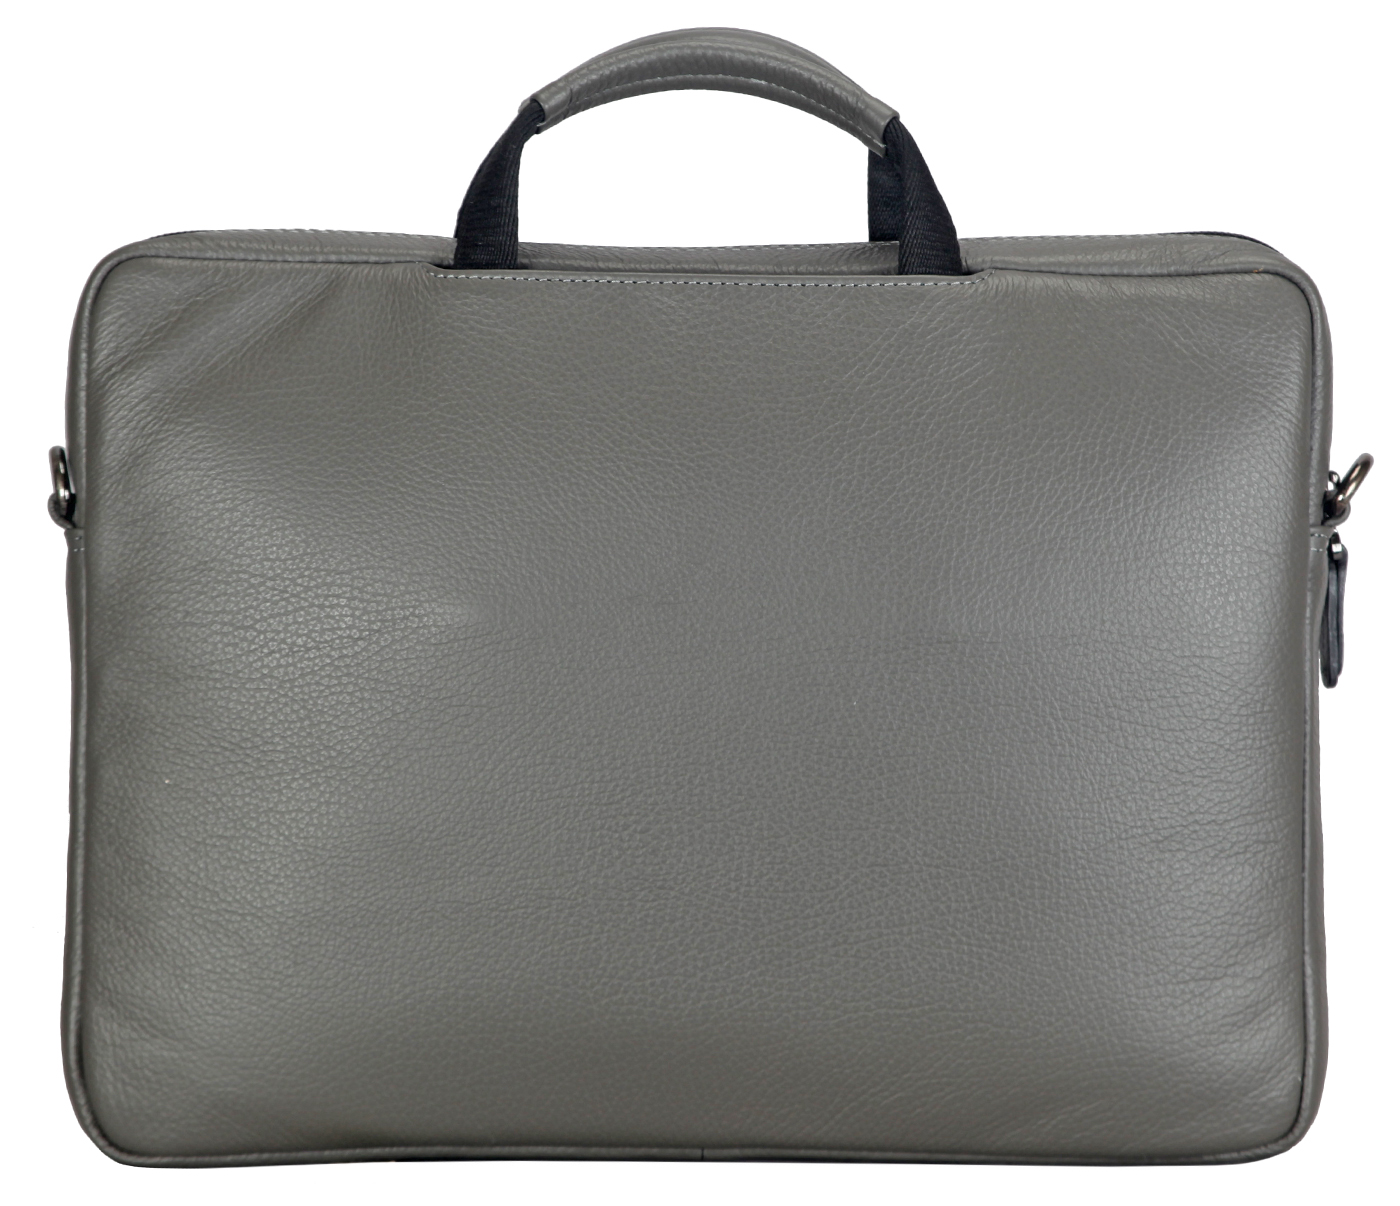 Portfolio / Laptop Bag-Javier-Laptop slim messenger bag in Genuine Leather - Grey